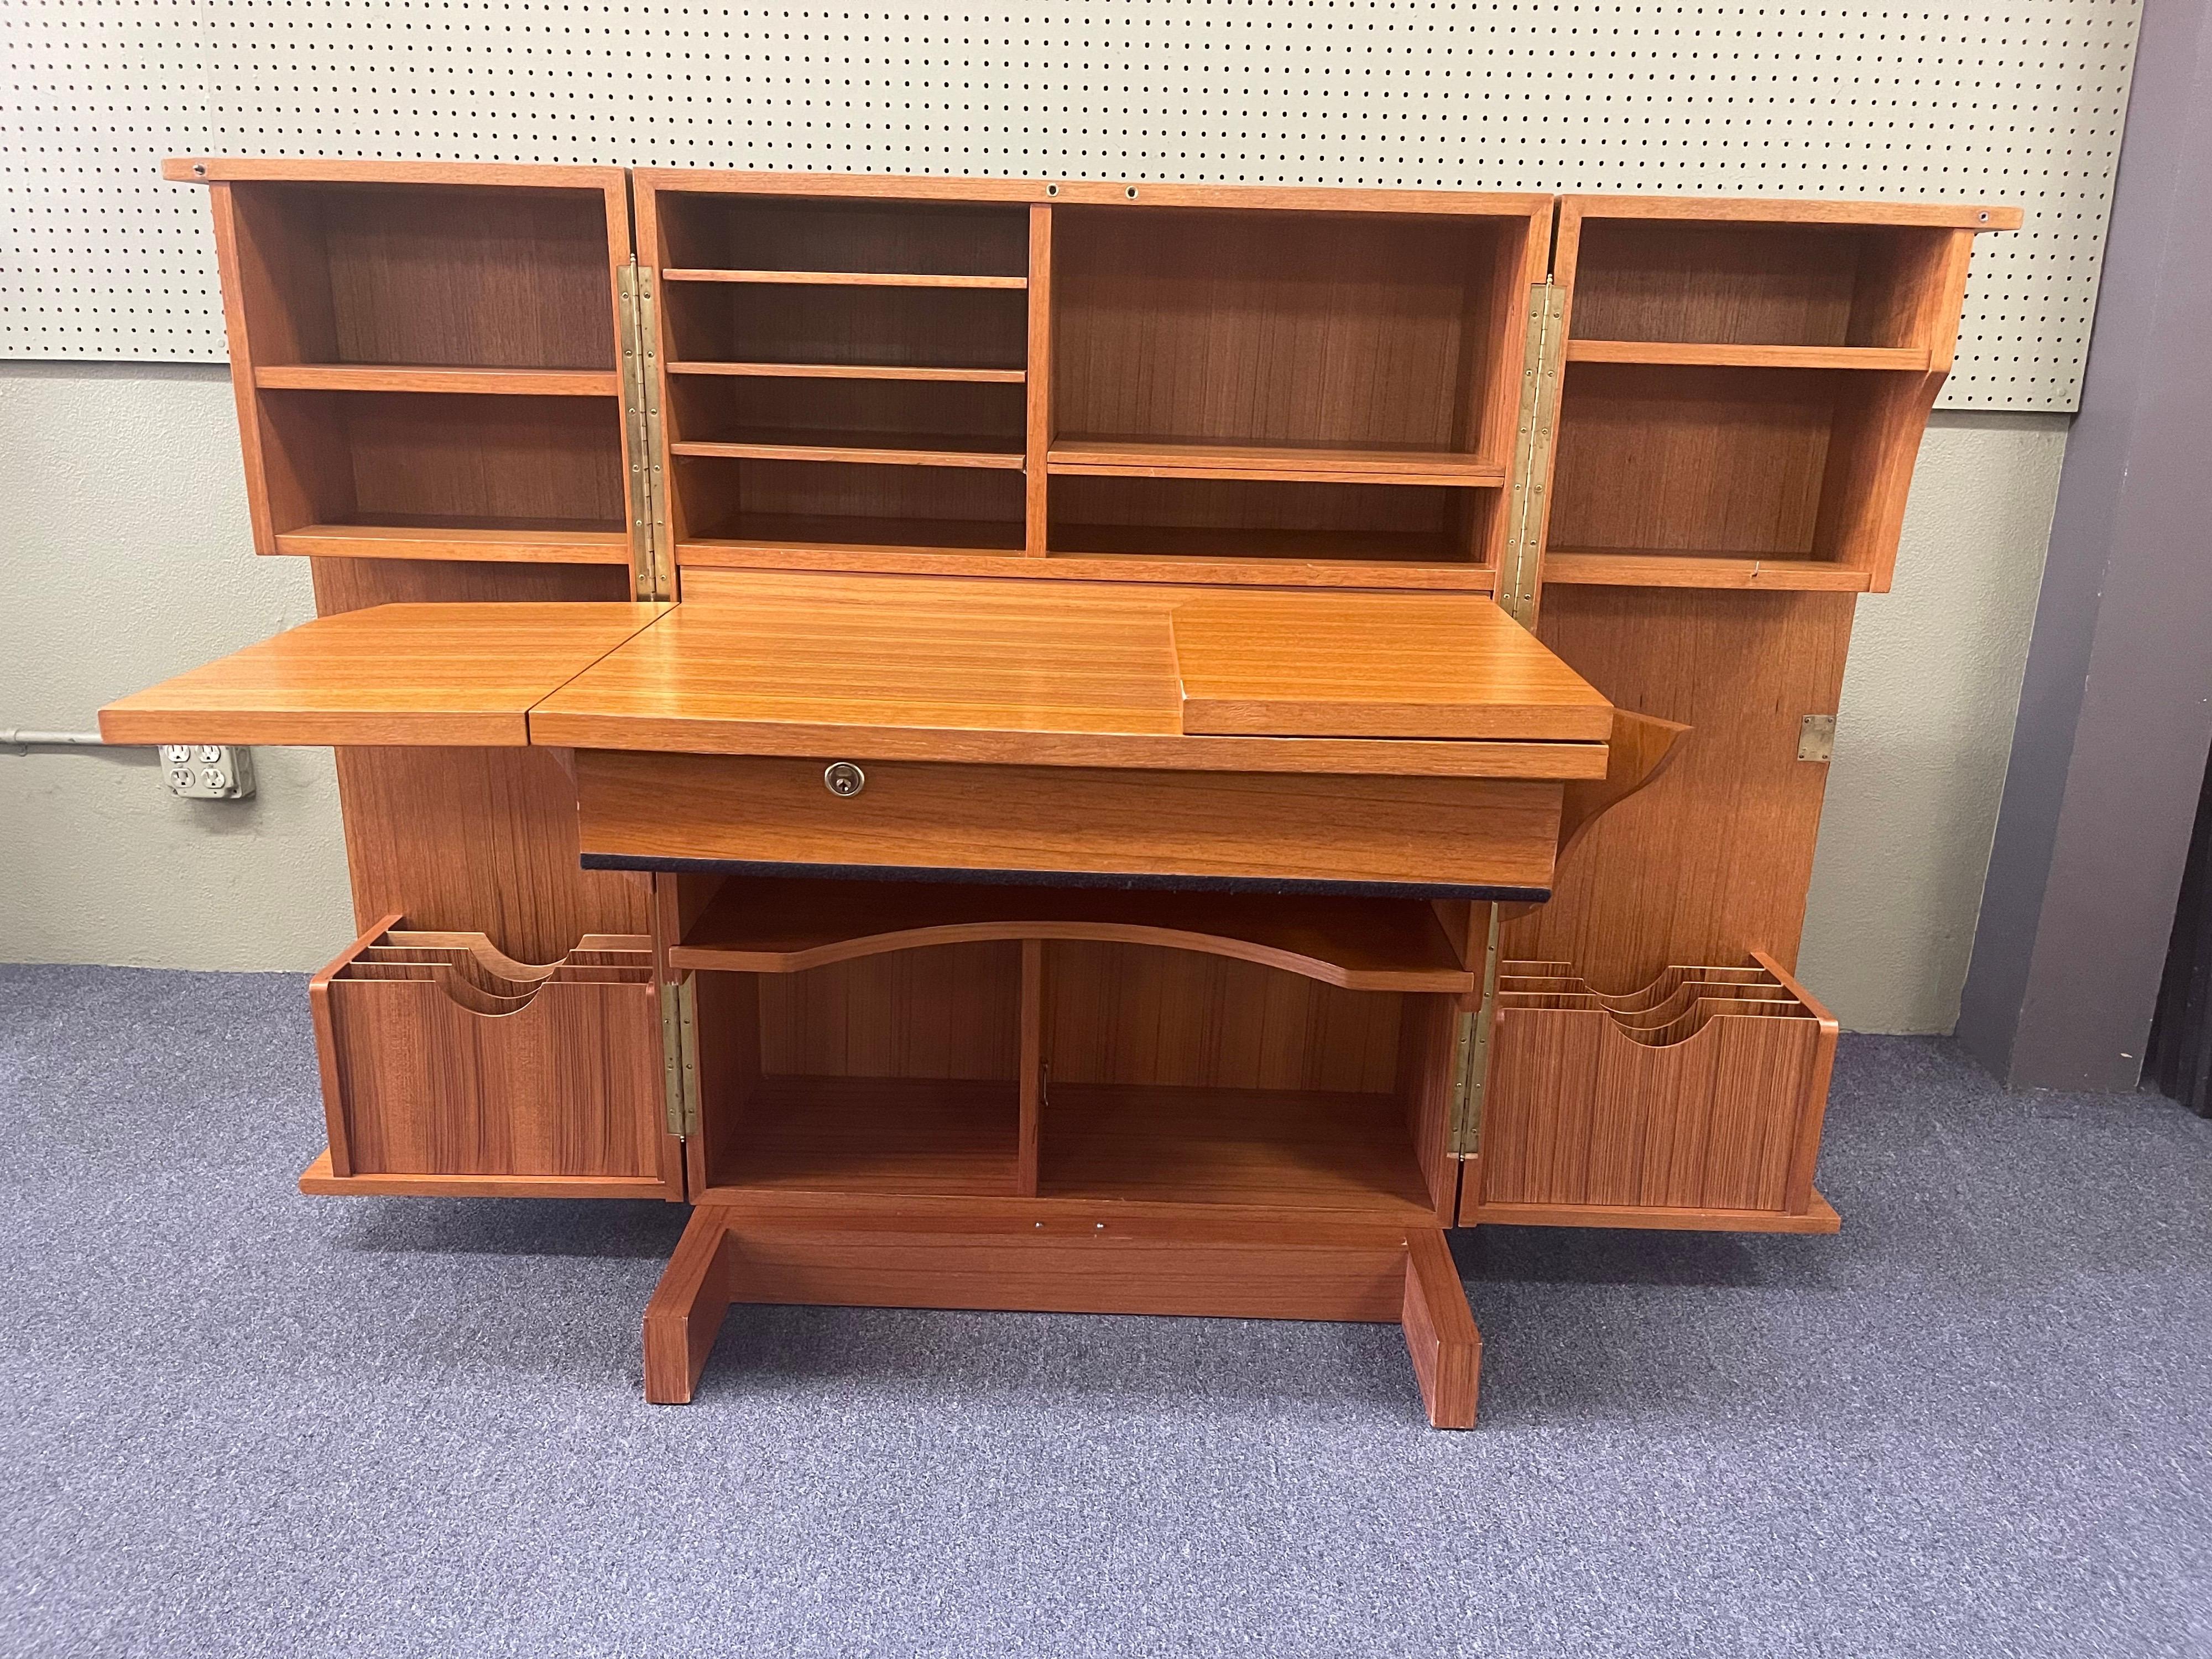 Rare Danish modern foldable teak writing desk / cabinet called the 